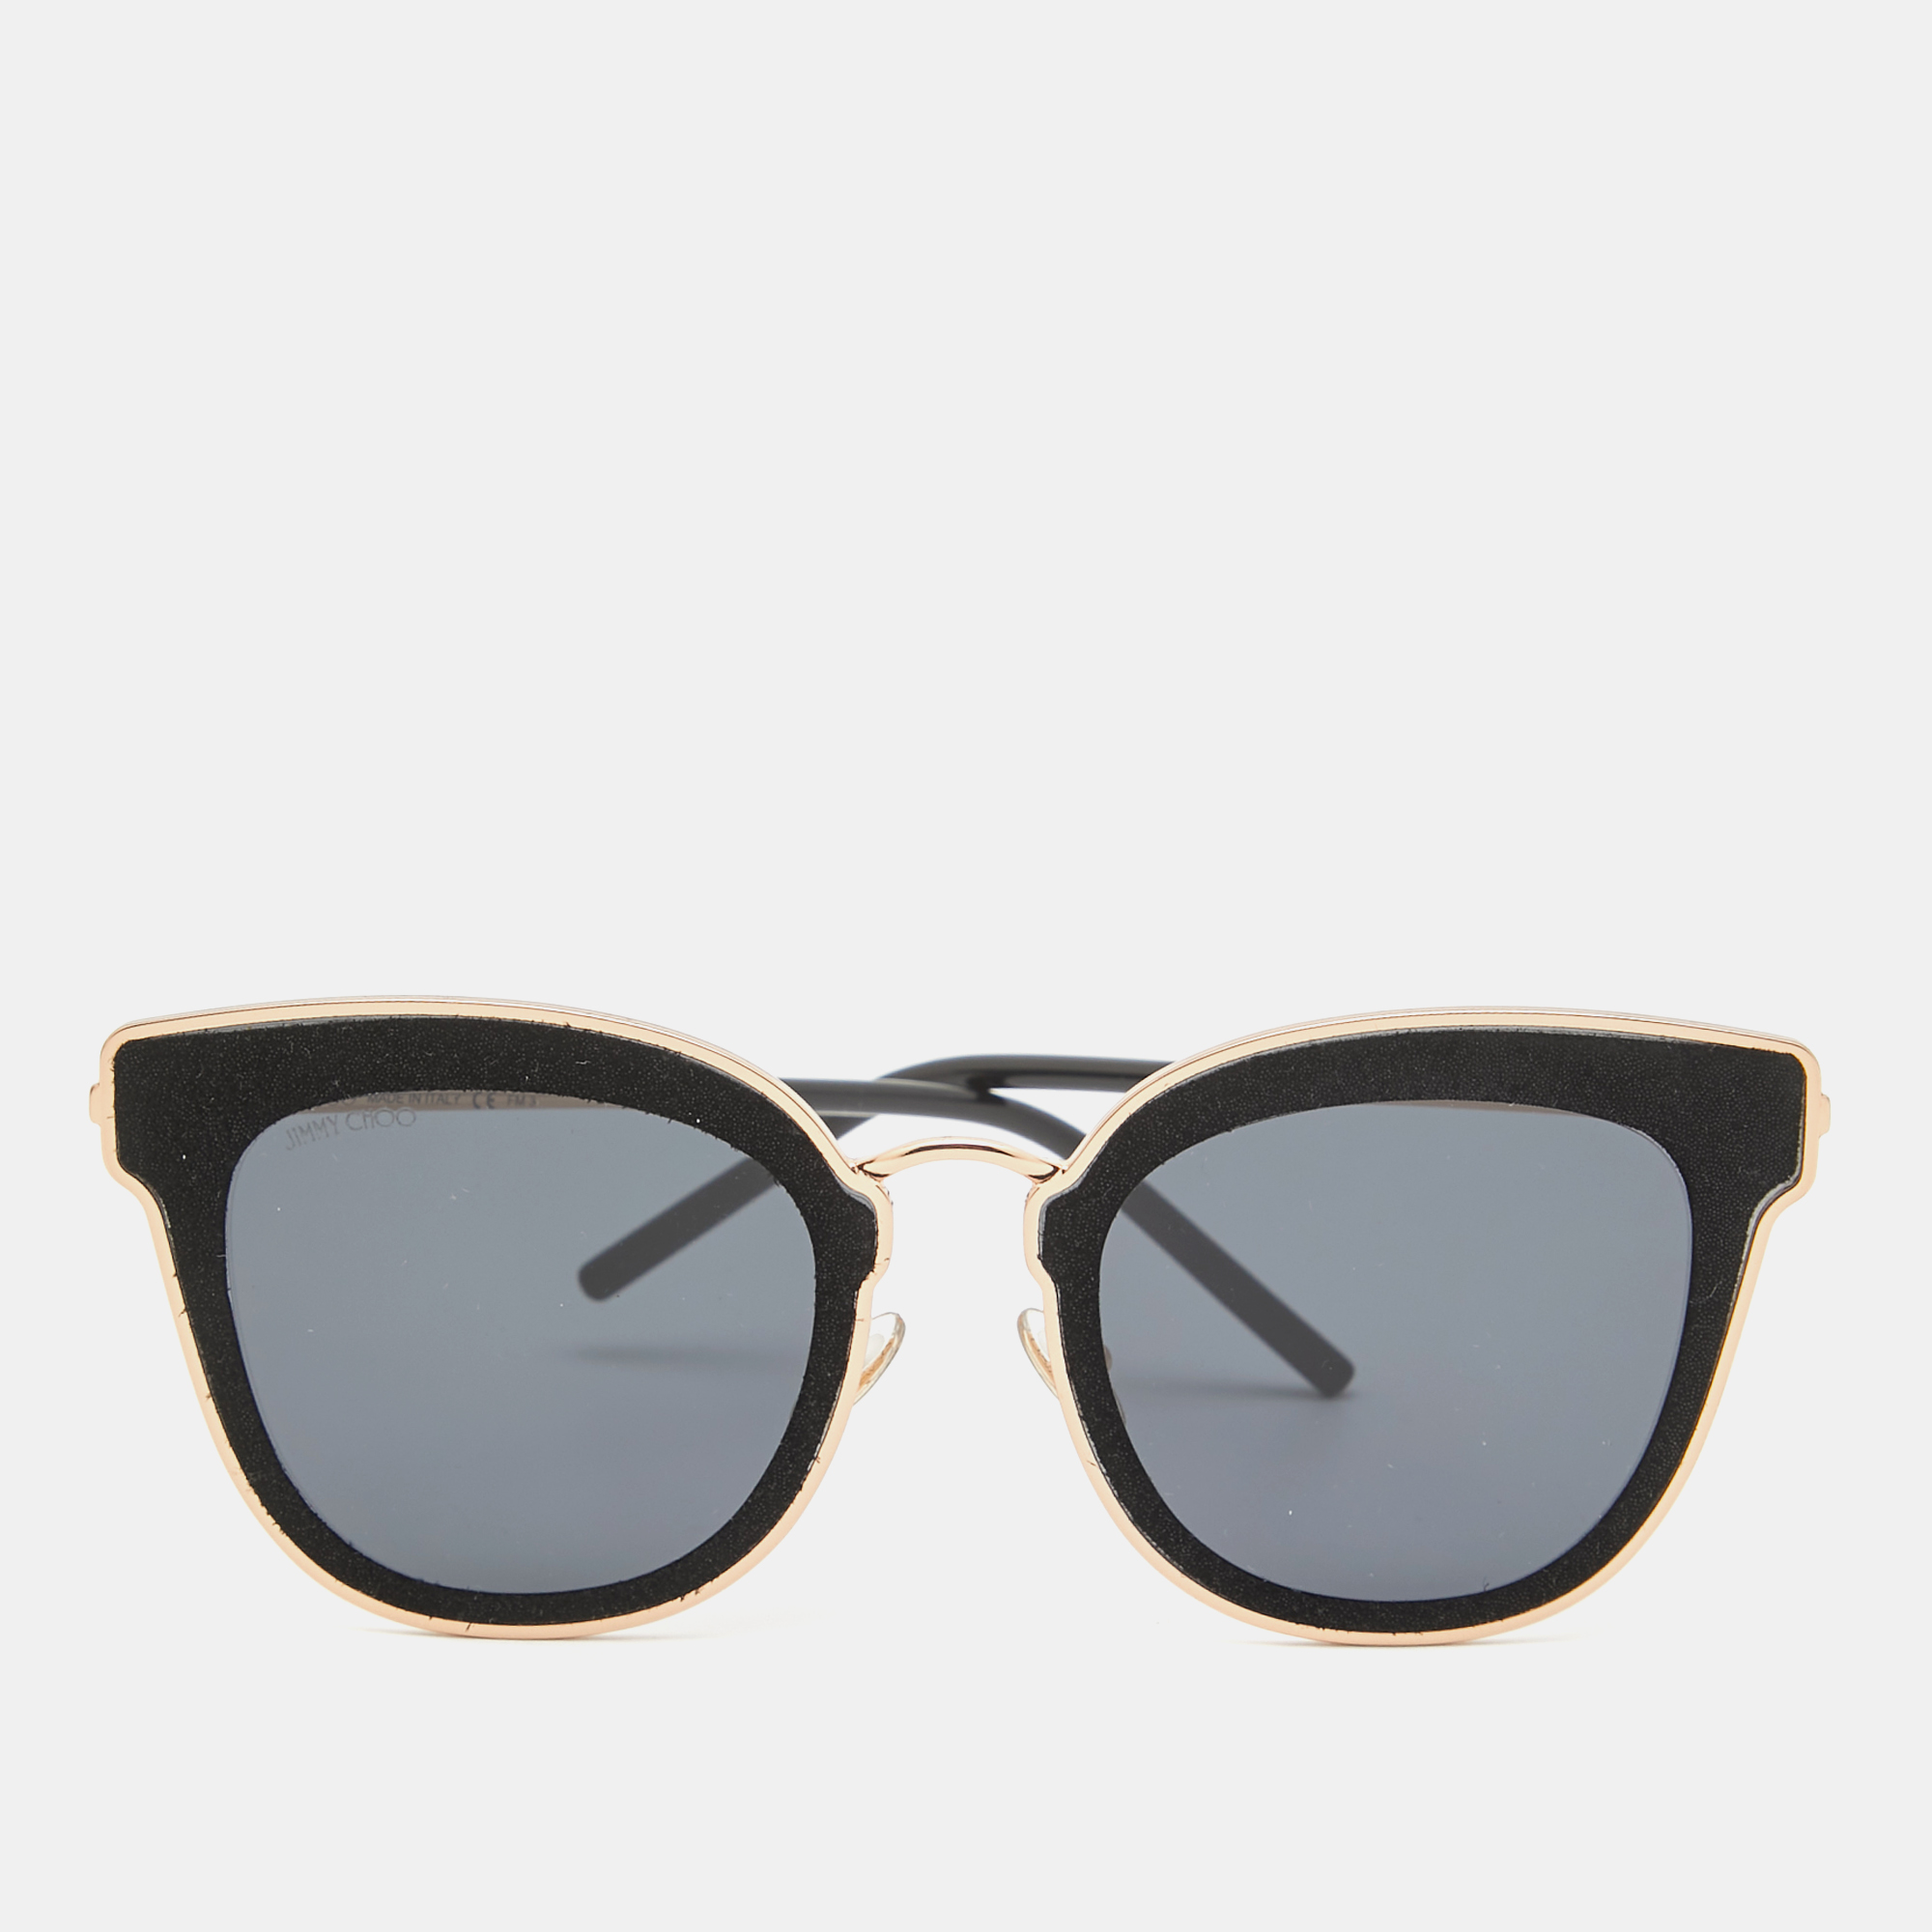 Jimmy choo black nile/s rhl2/k aviator sunglasses